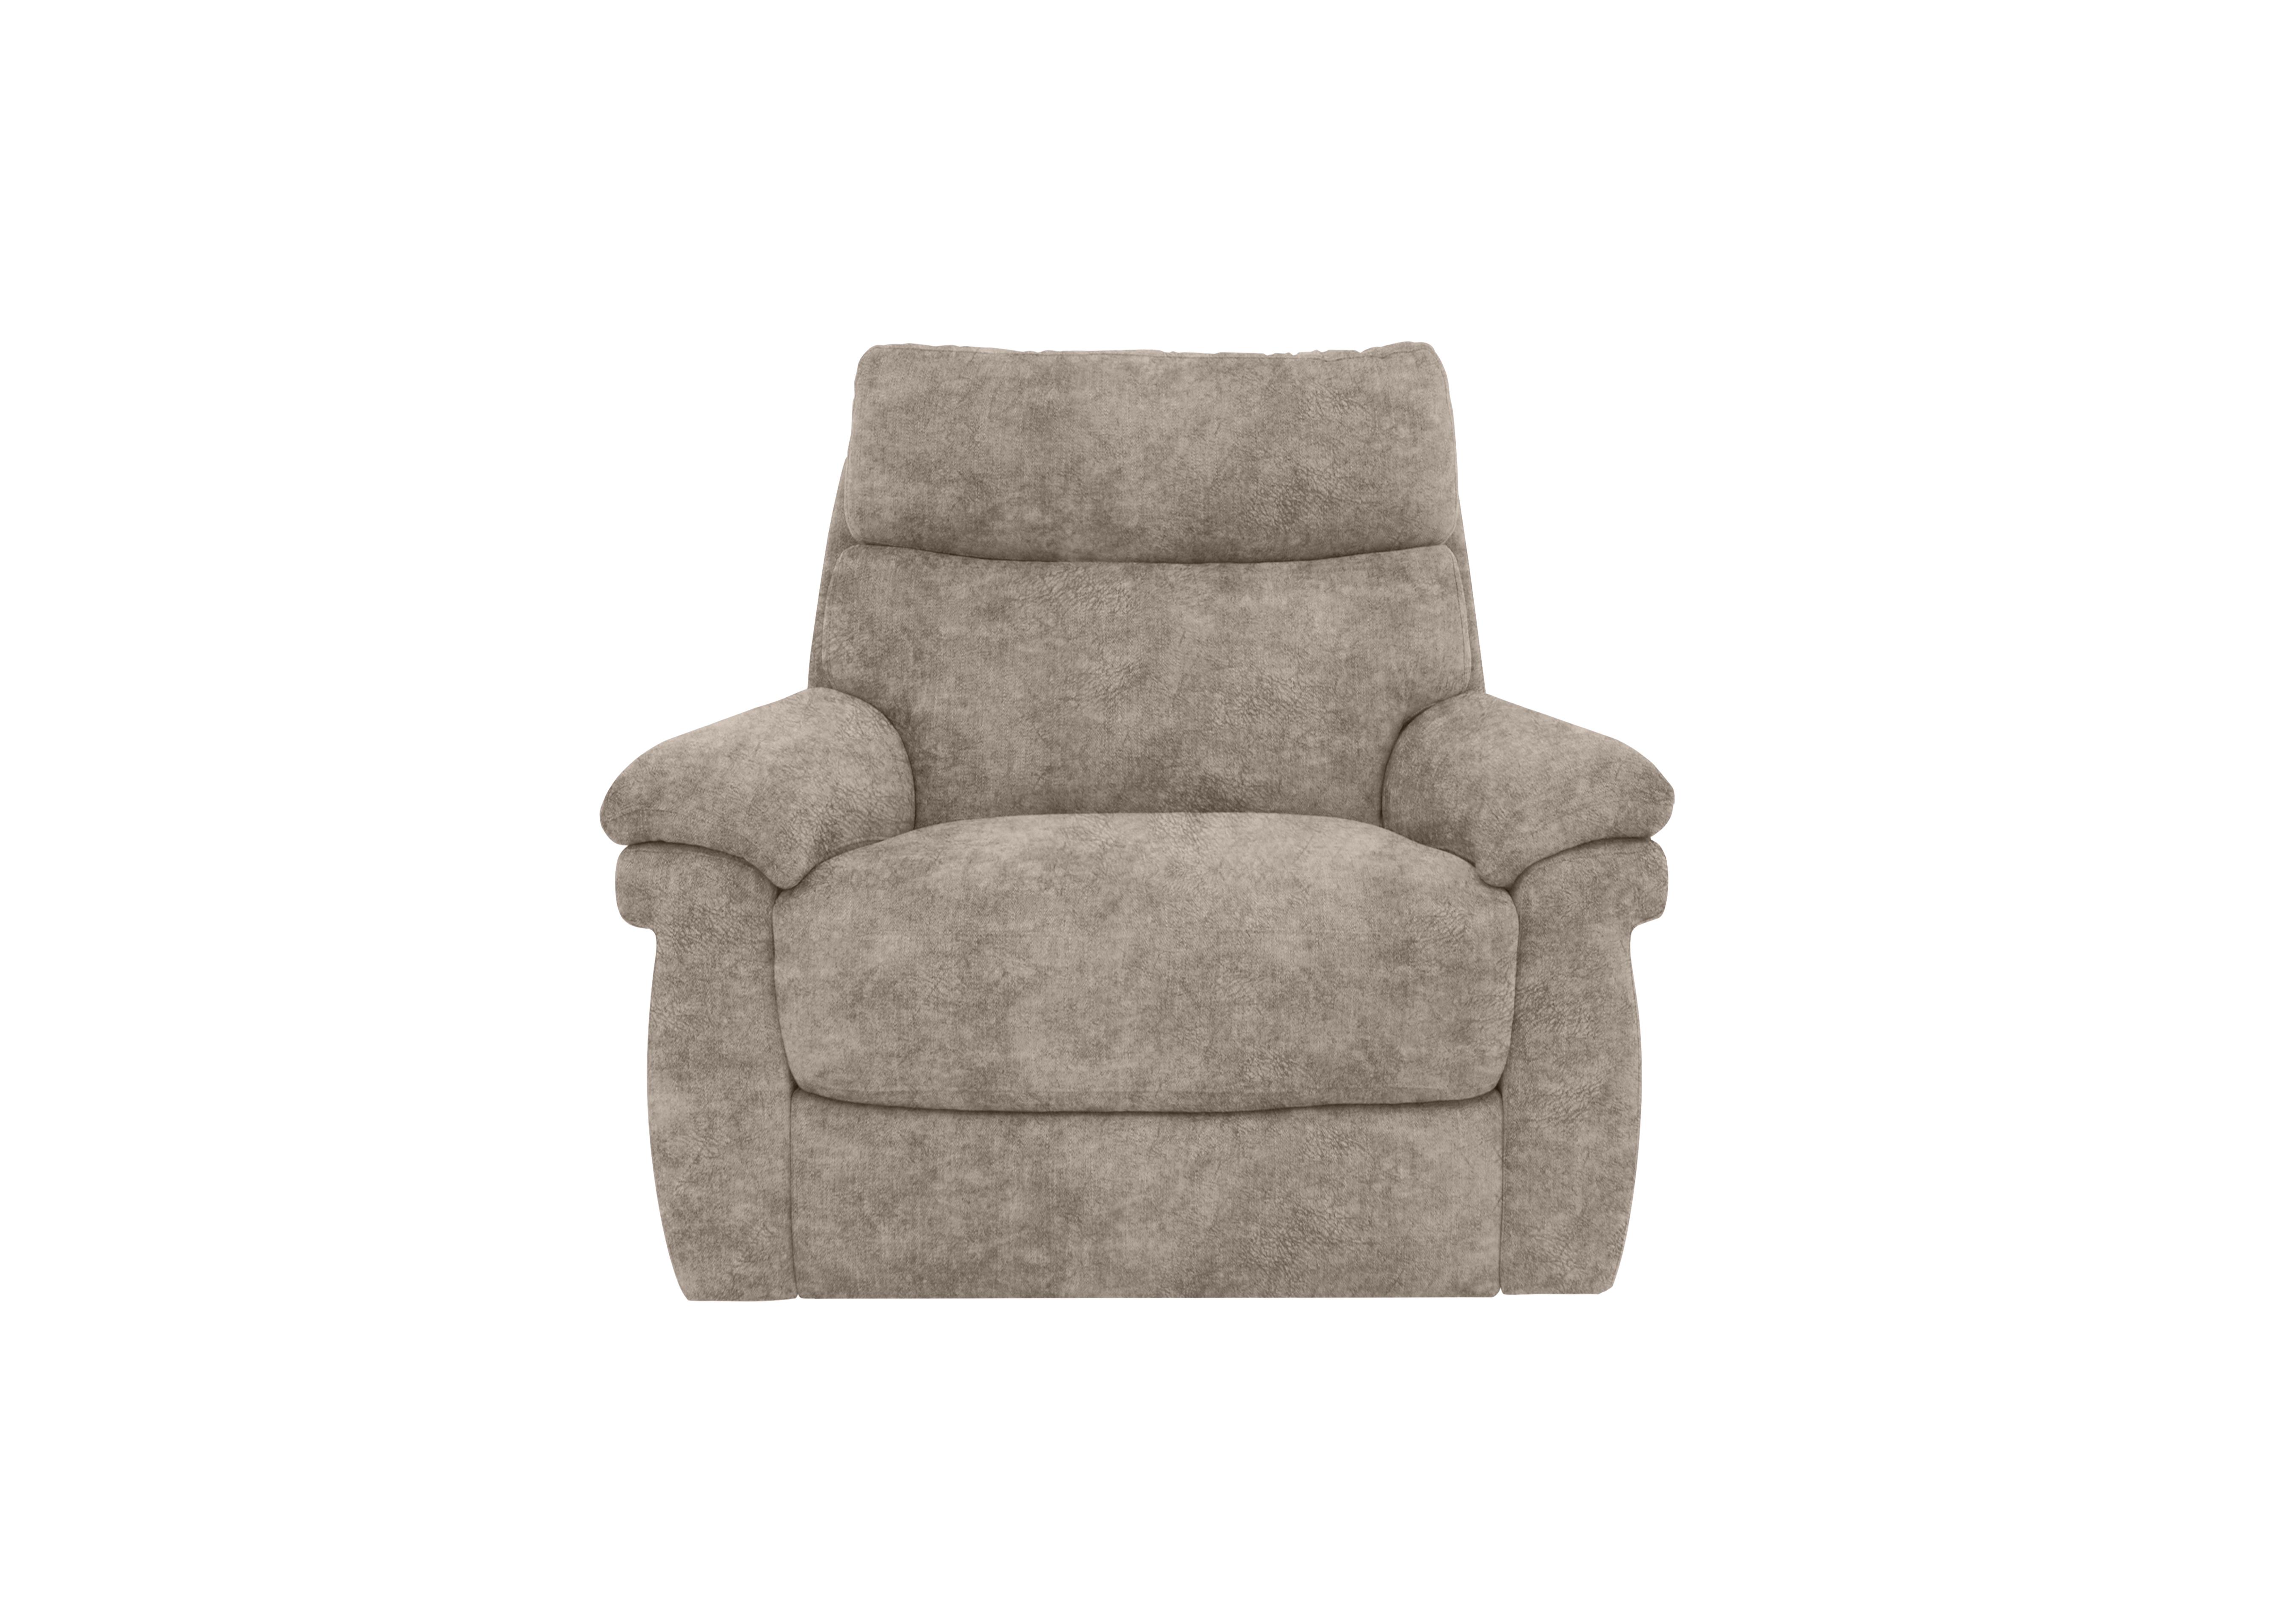 Serene Fabric Chair in Bfa-Bnn-R29 Mink on Furniture Village